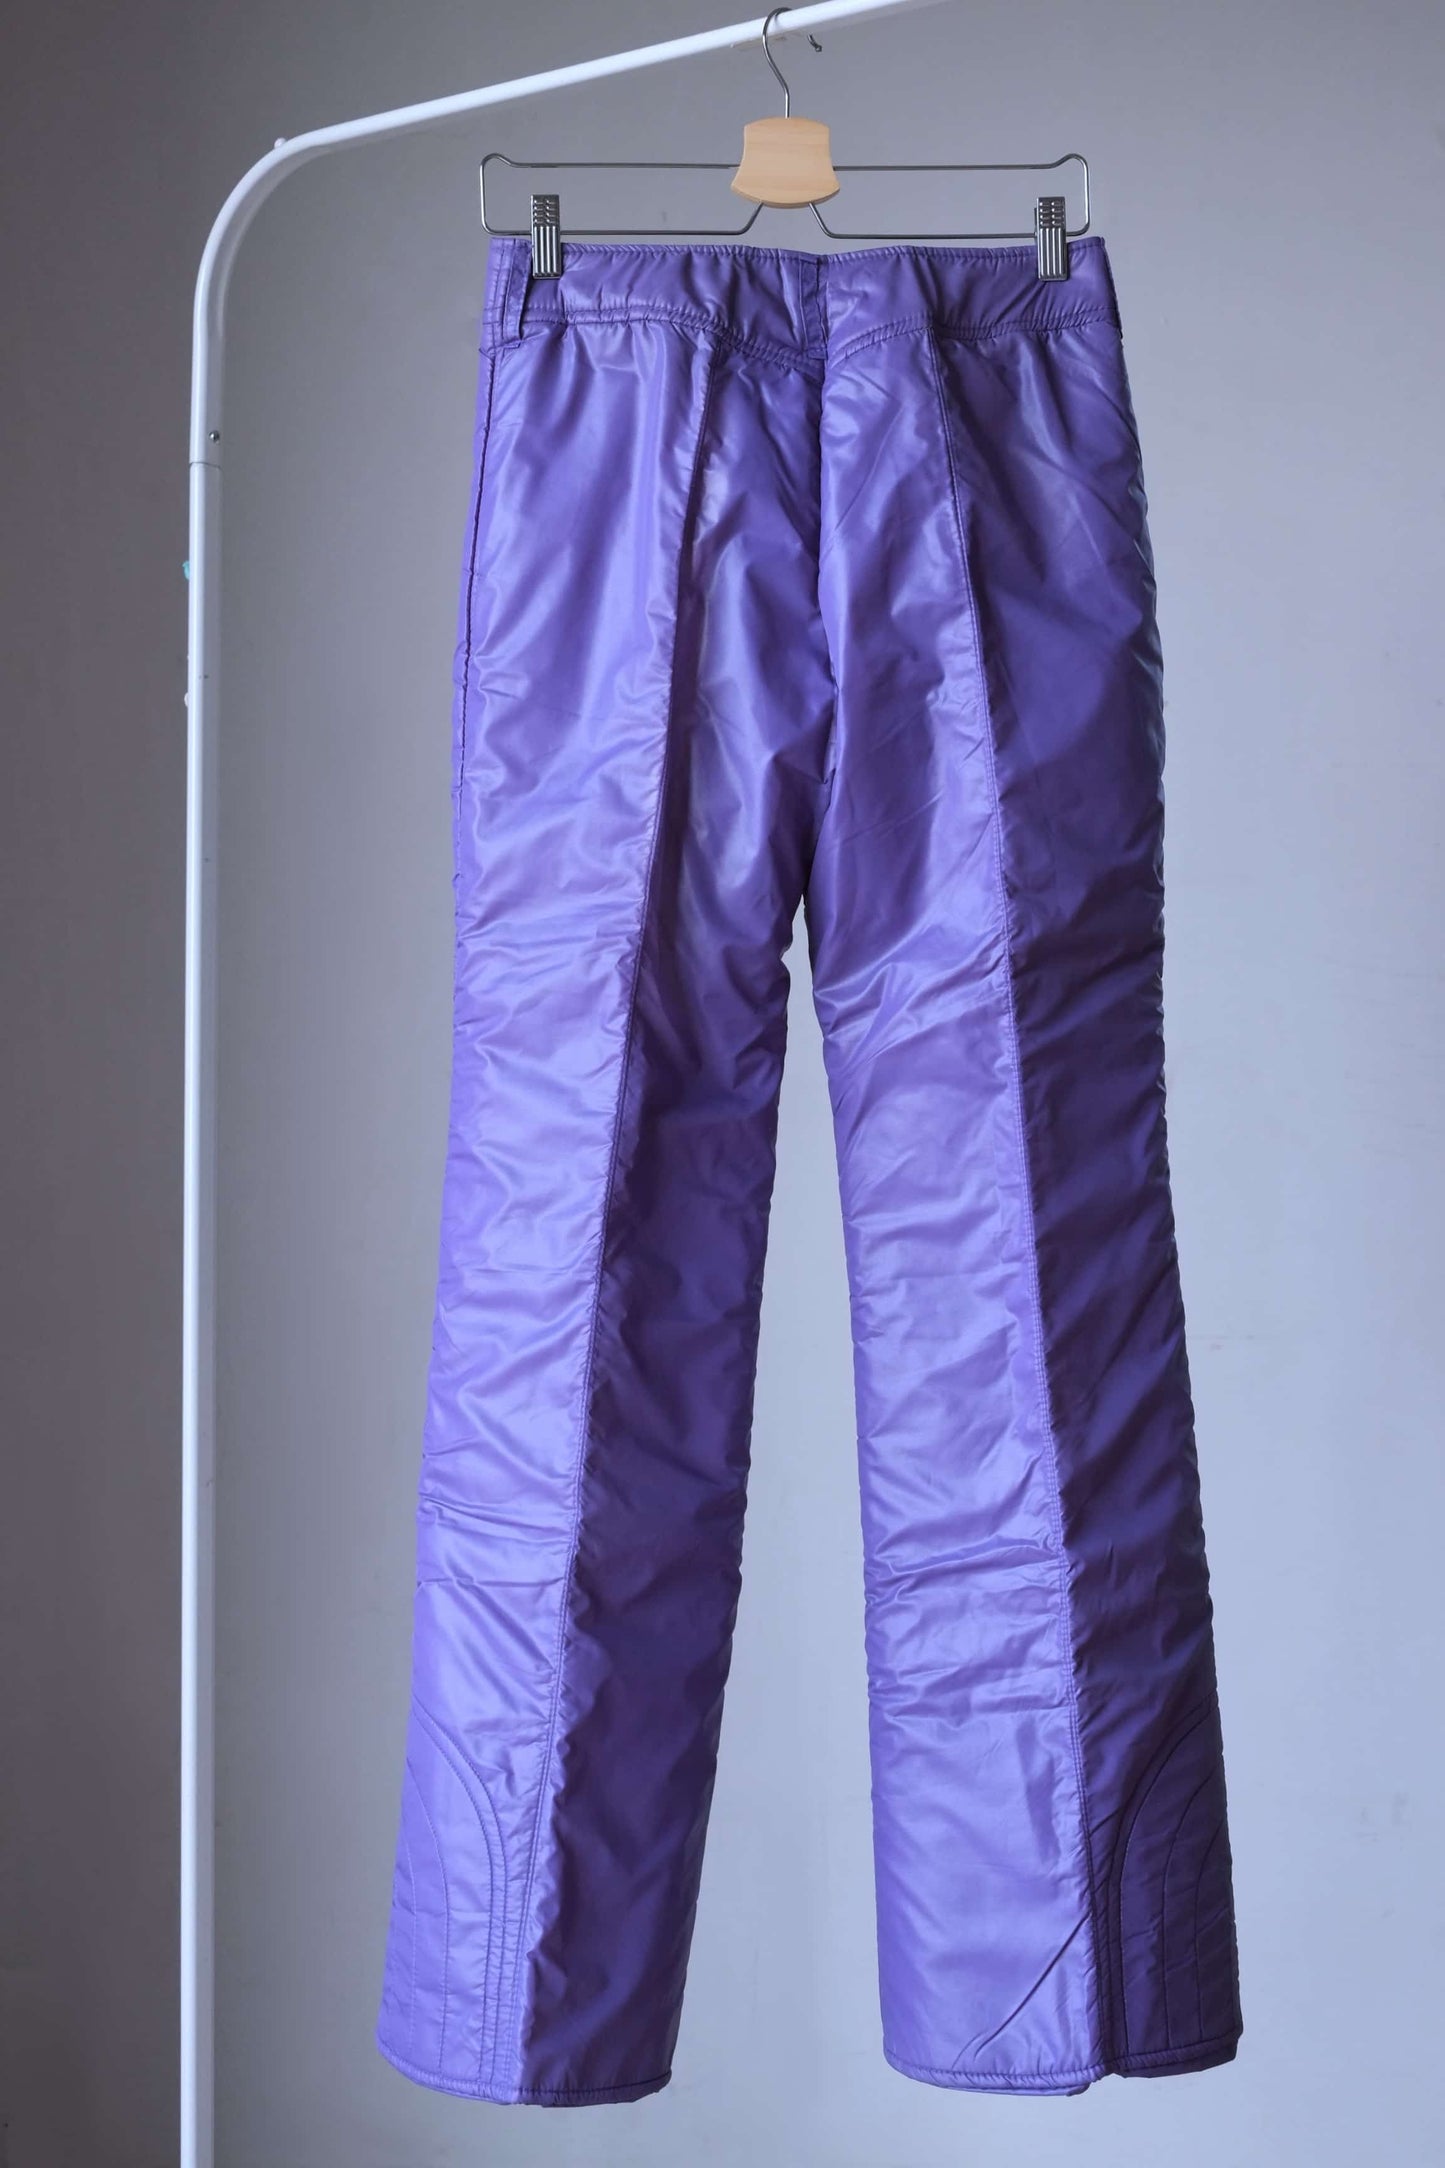 Back view of purple mossant vintage 70s women ski pants on hanger